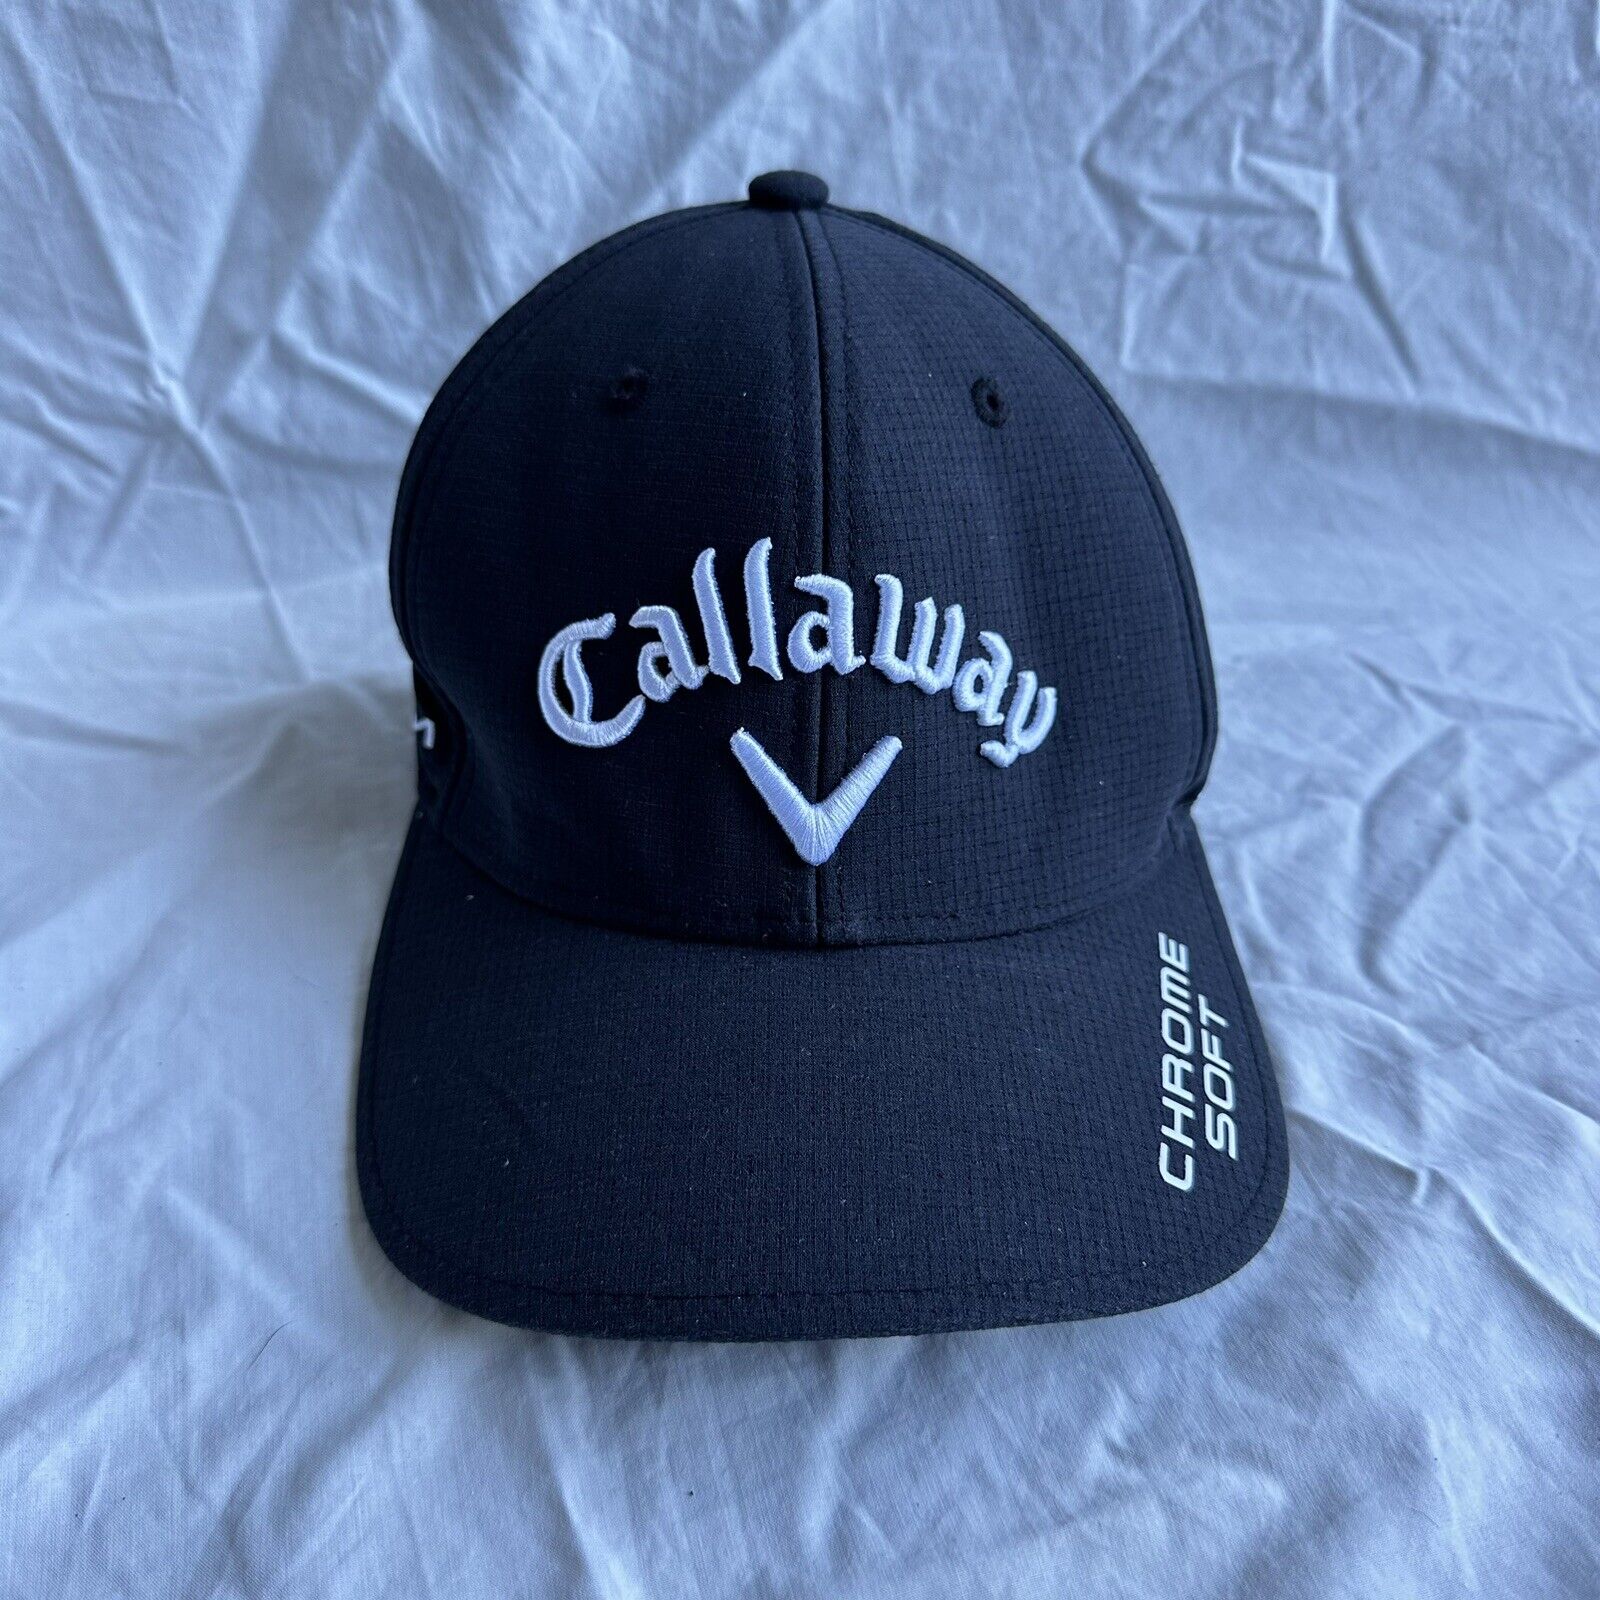 Callaway Golf Tour Chrome Soft Paradym Odyssey Authentic Adjustable Black Cap